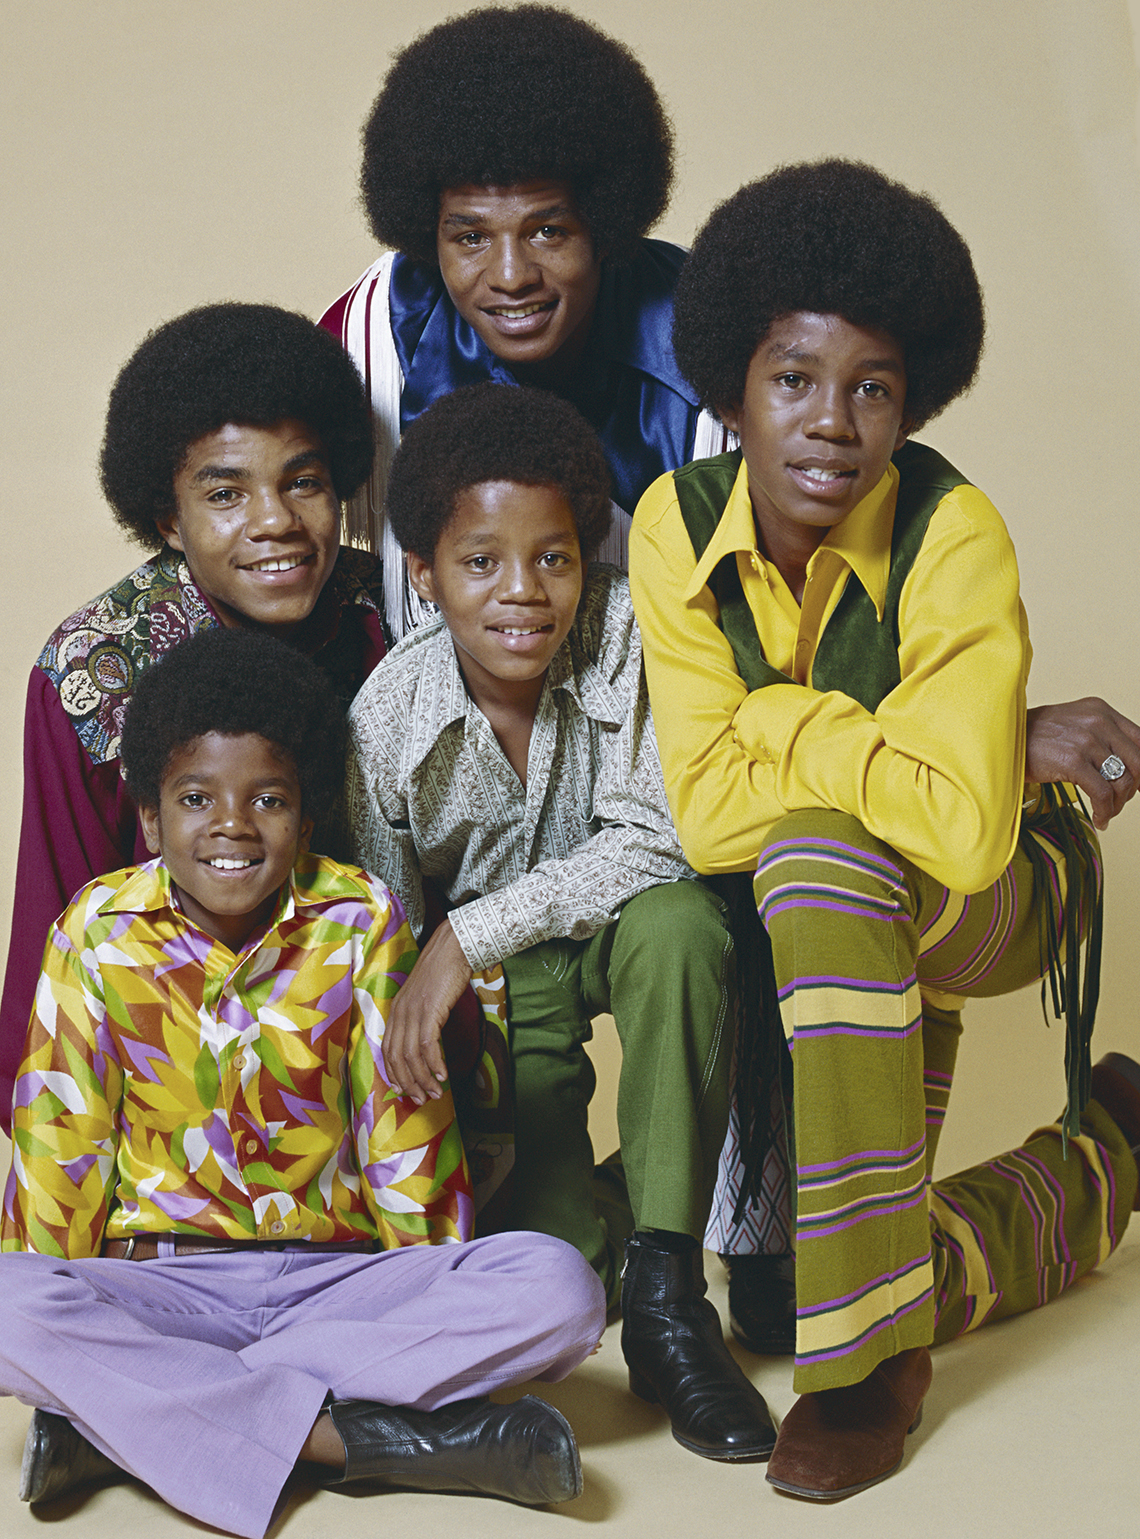 Grupo The Jackson 5, enero 1971